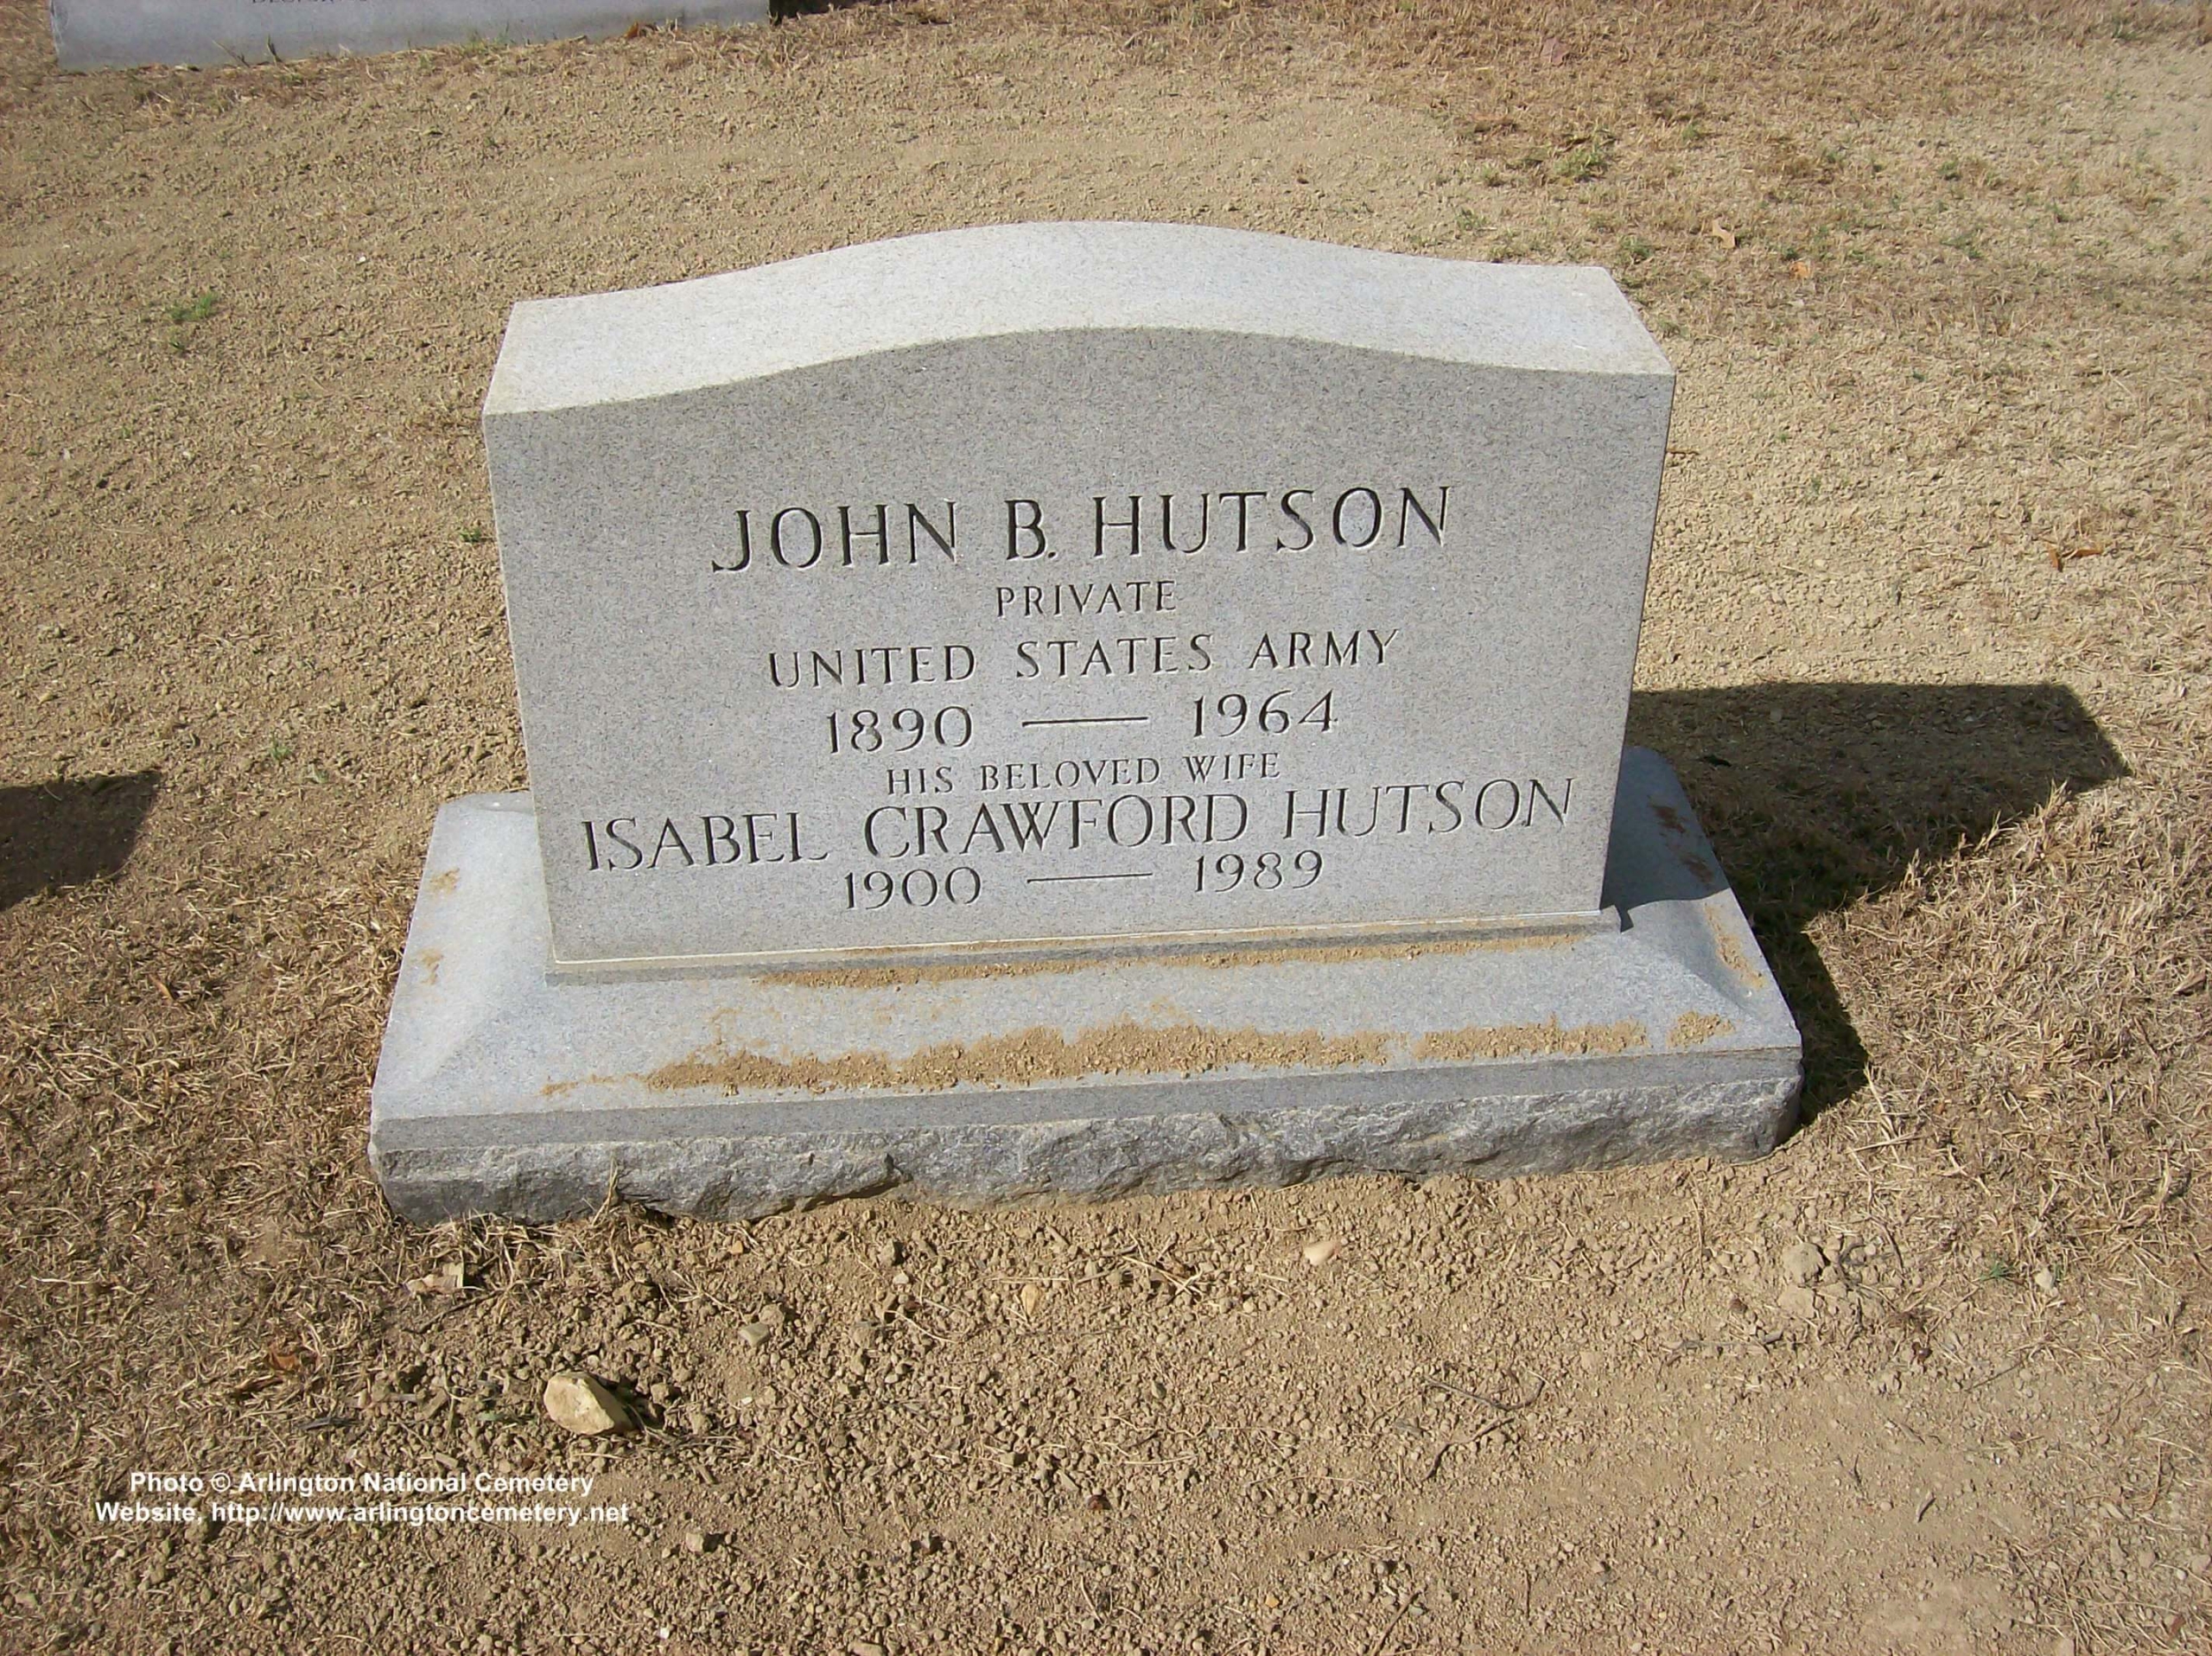 jbhutson-gravesite-photo-october-2007-001